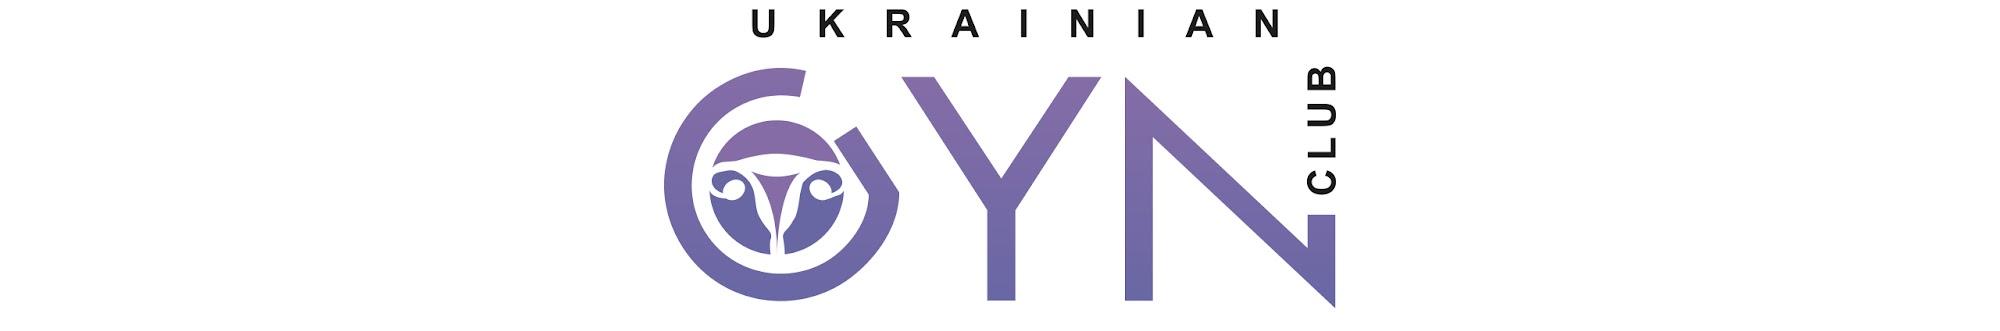 UkrainianGynClub